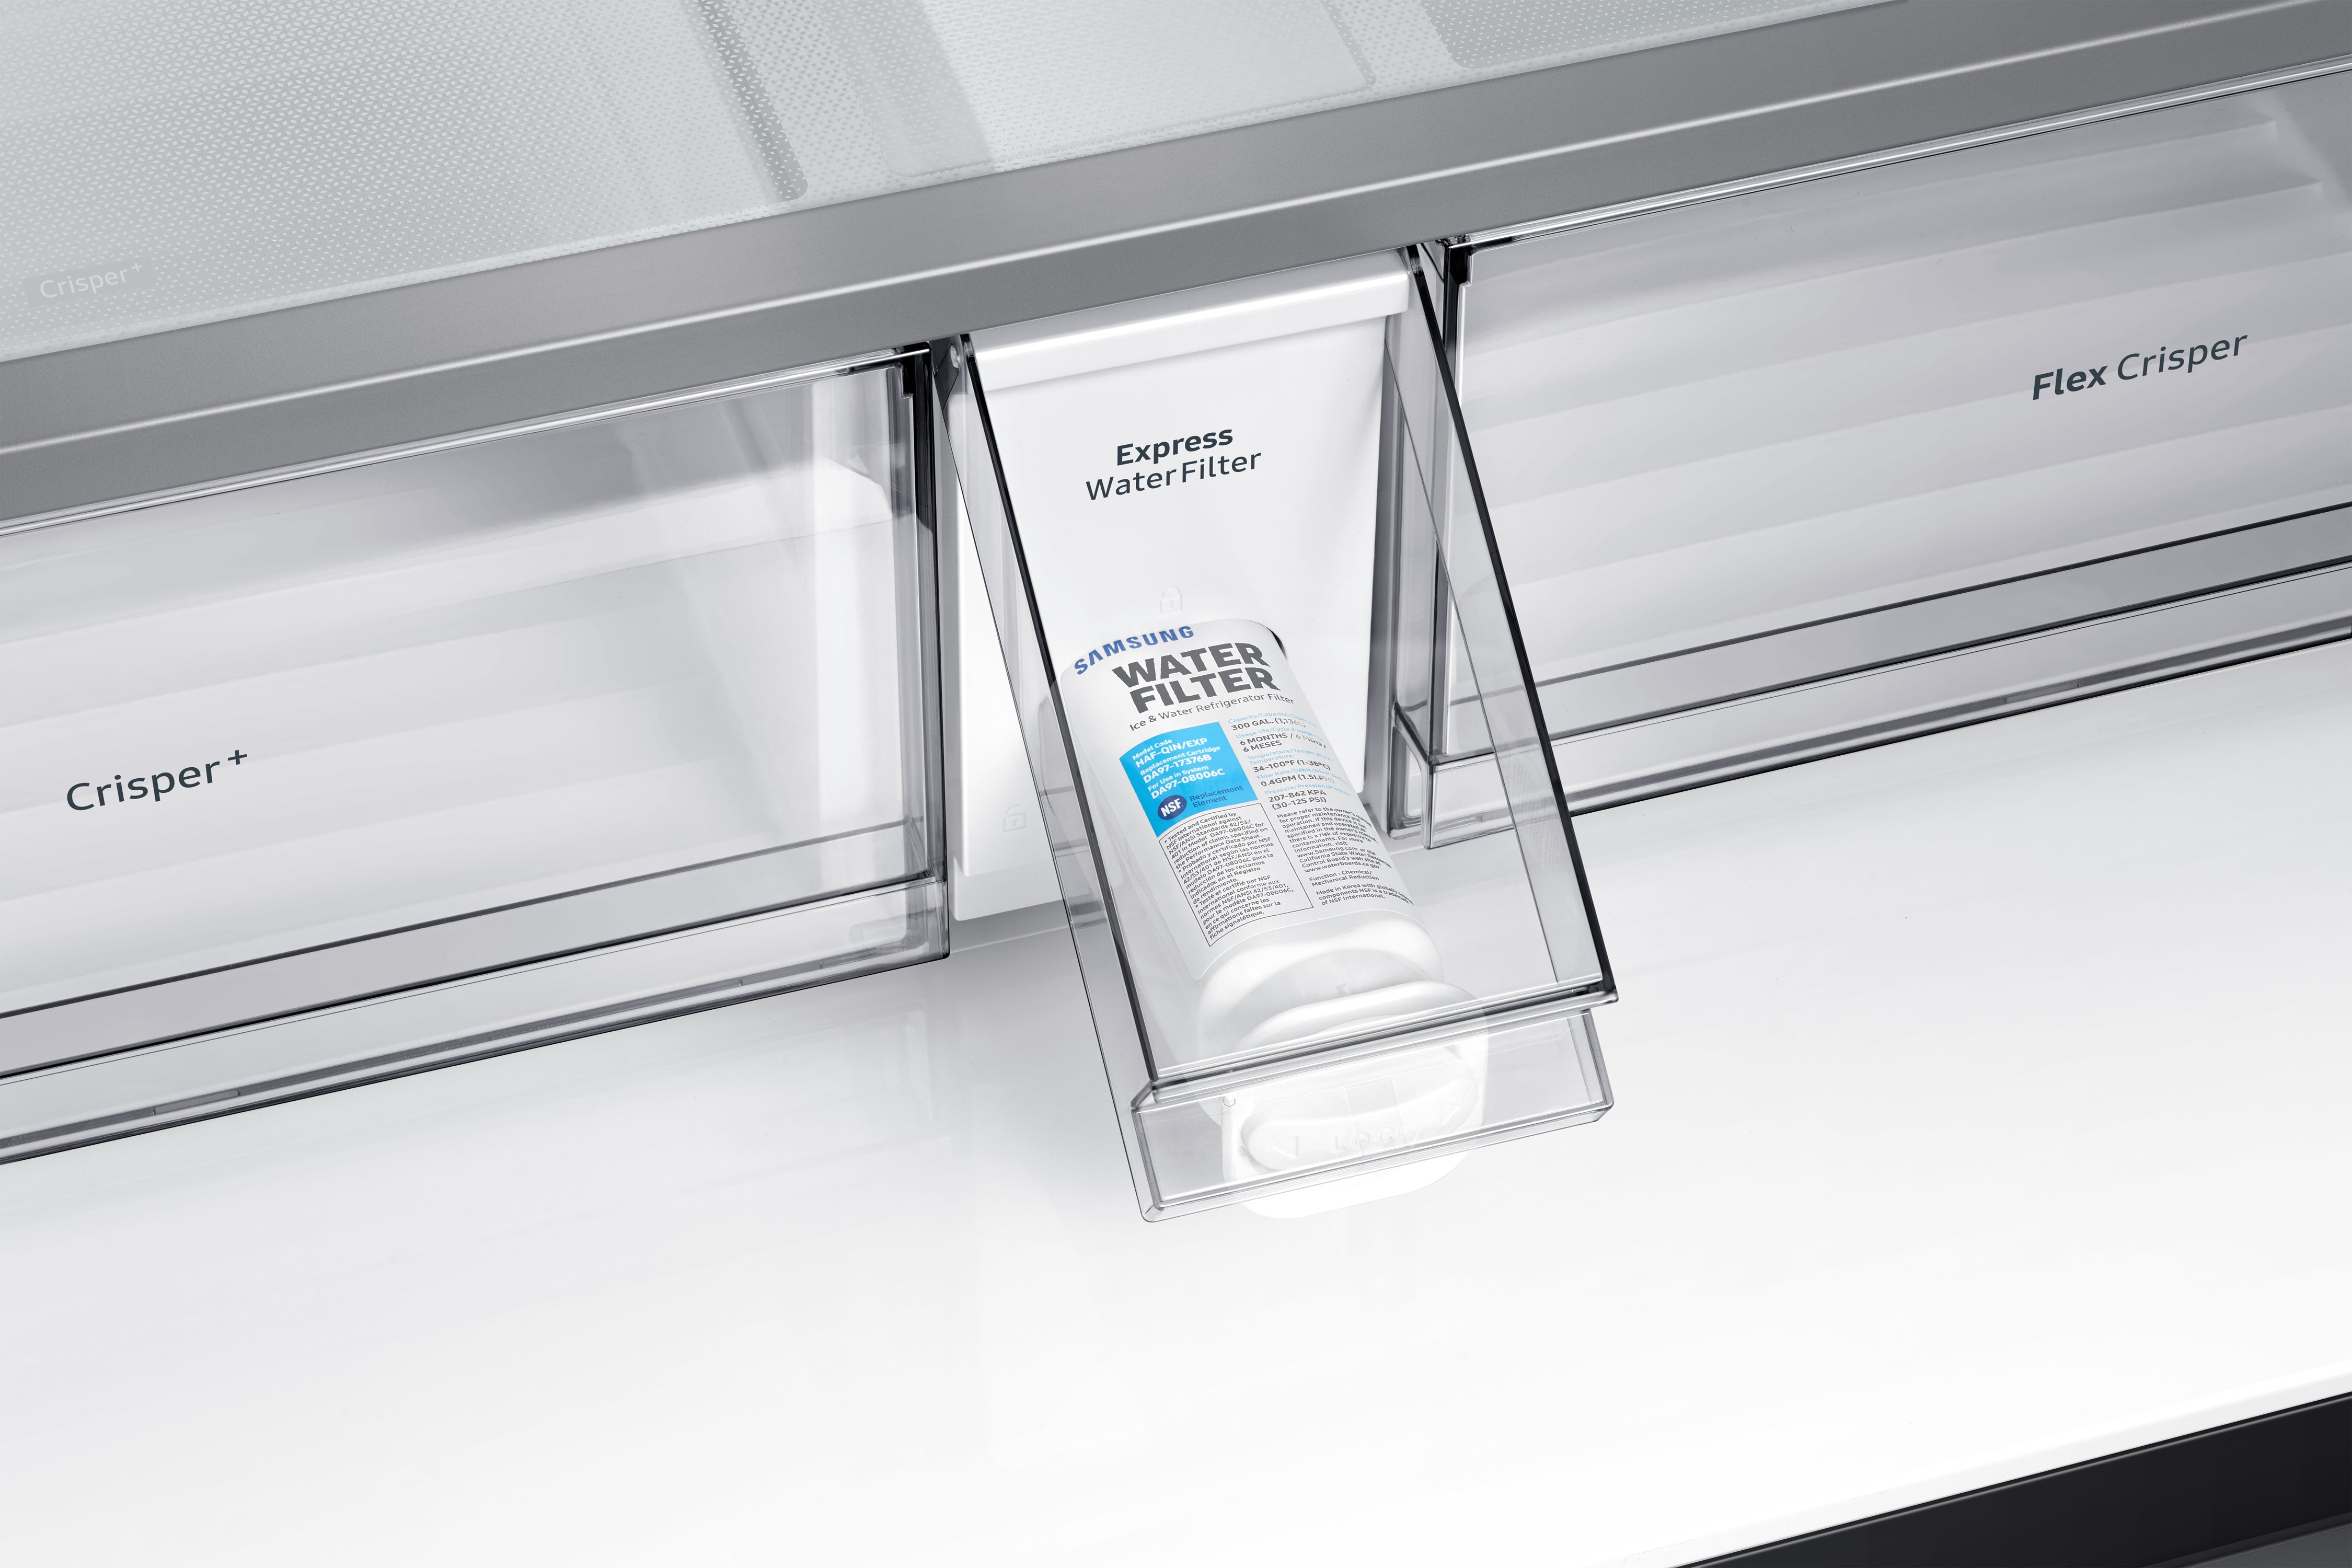 Samsung - 35.875 Inch 22.8 cu. ft 4-Door French Door Refrigerator in Black Stainless - RF23A9671SG